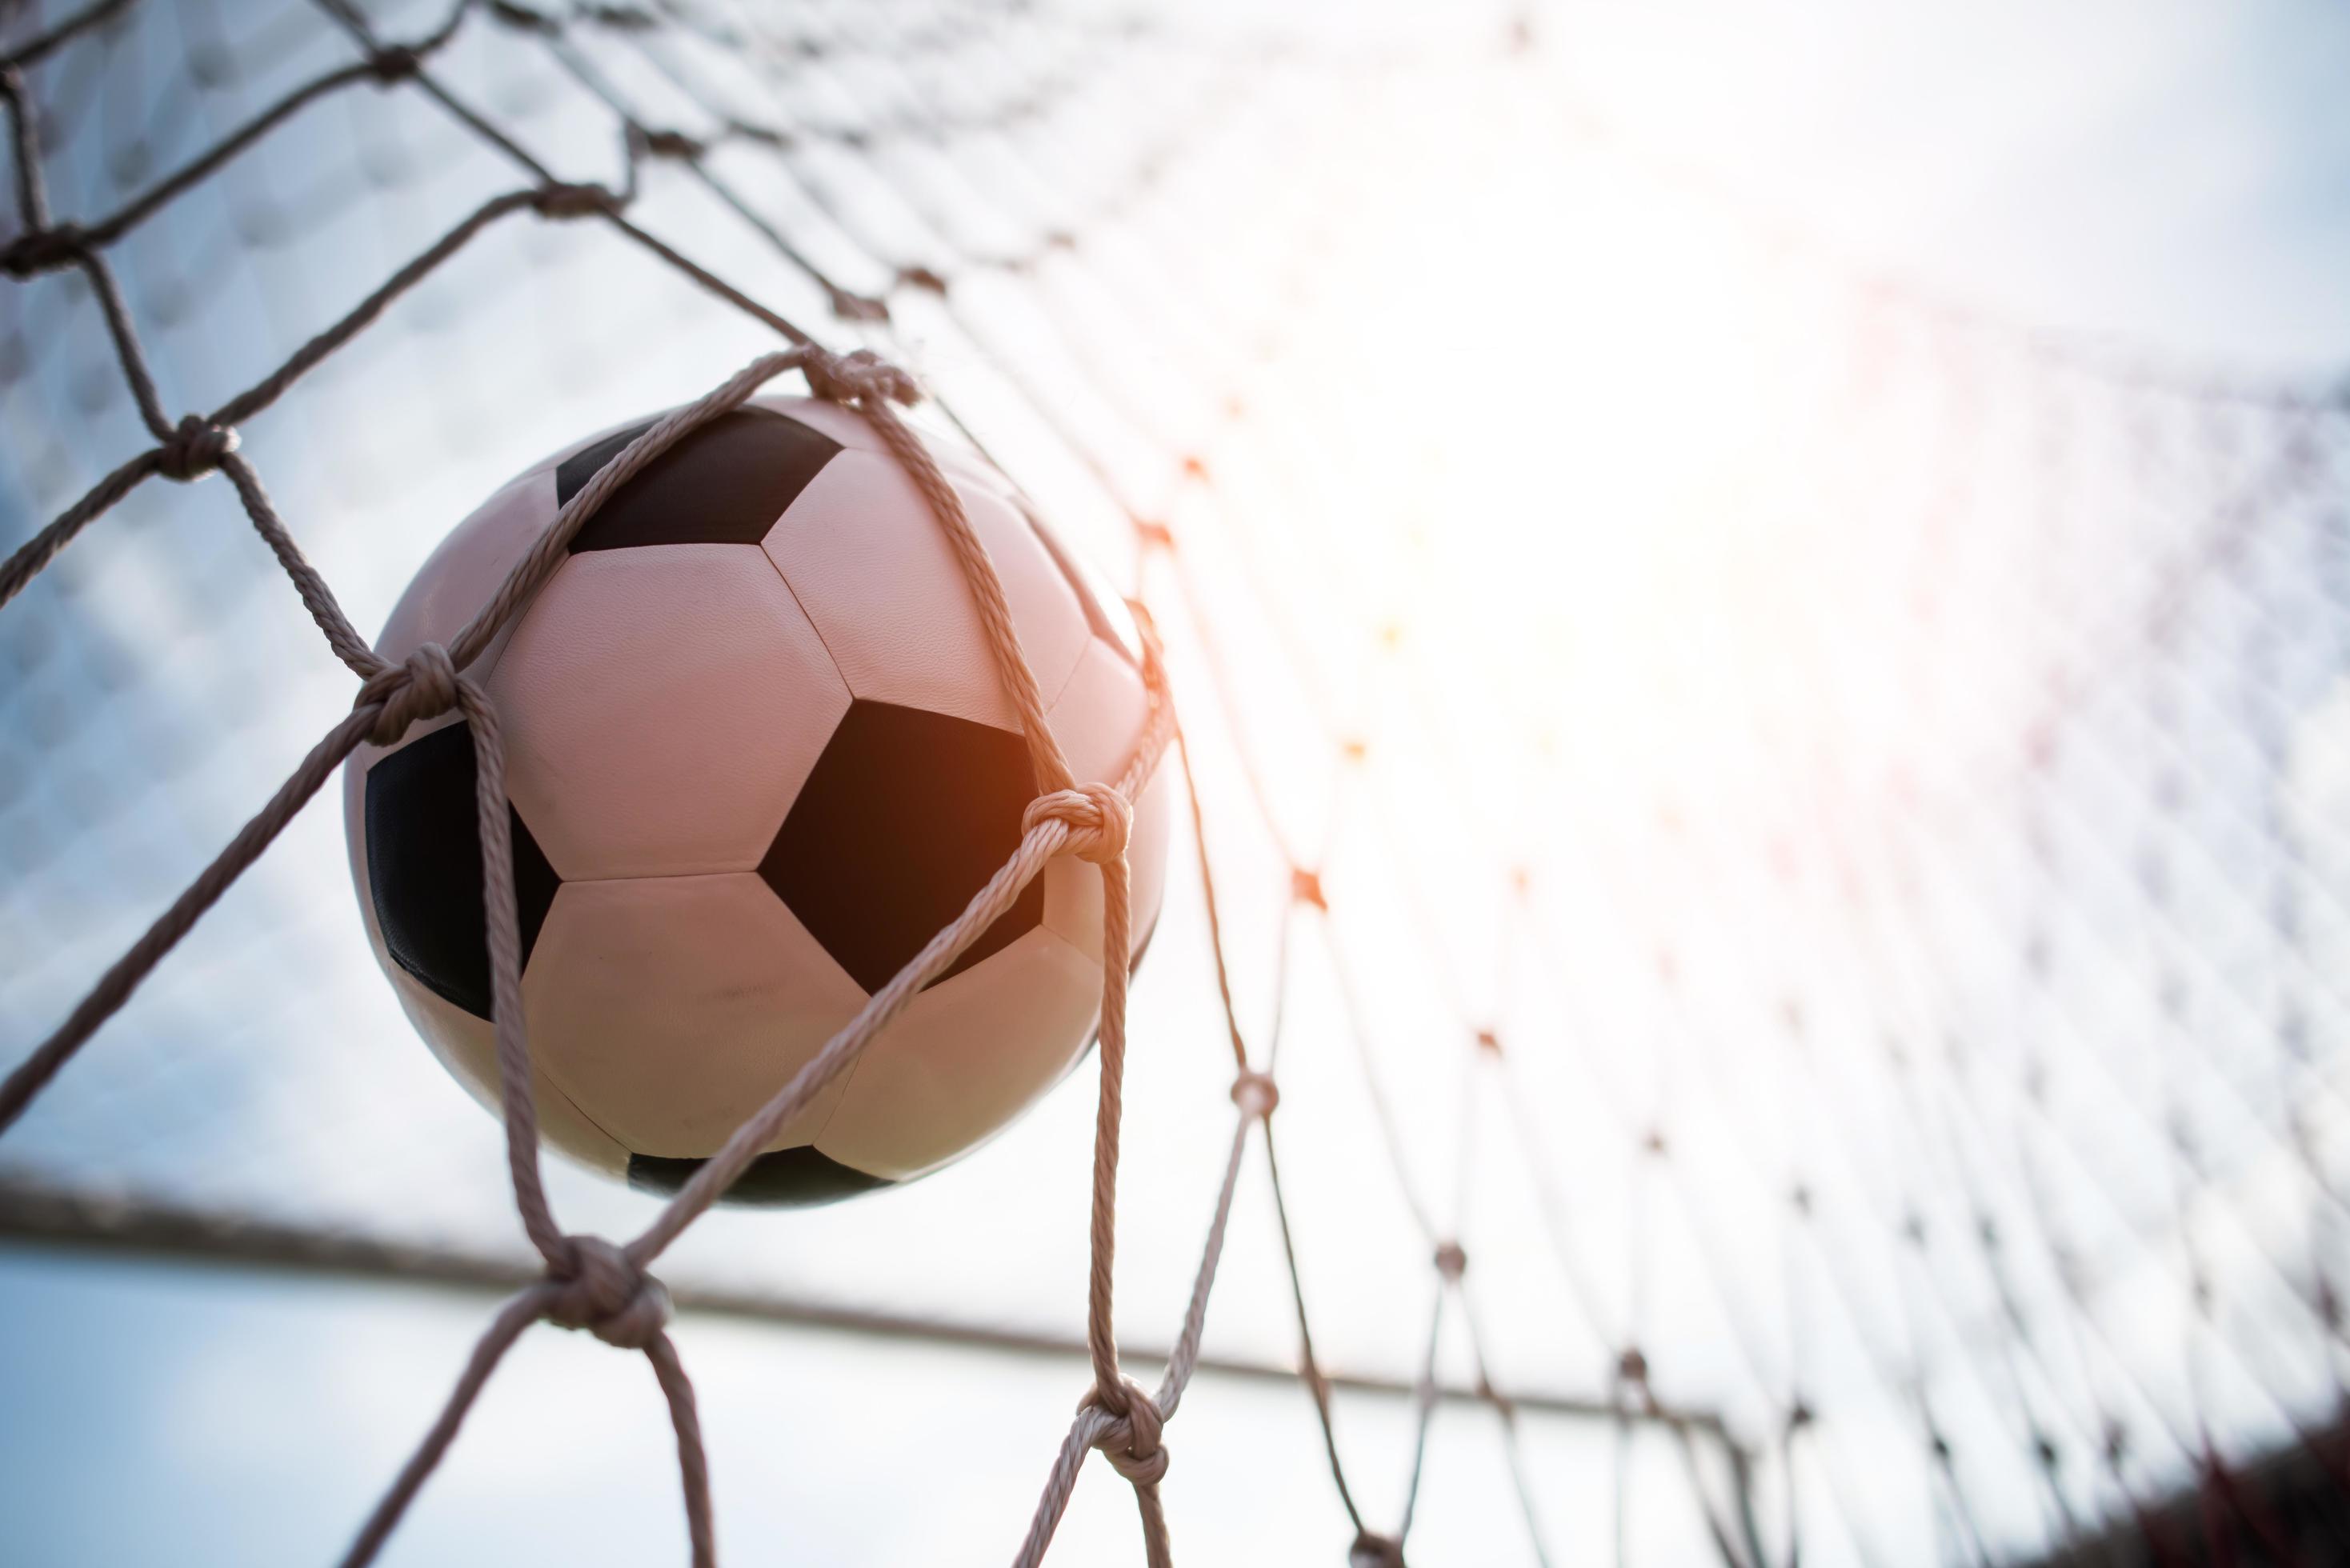 Soccer Ball Soars Into Goal Net Stock Photo At Vecteezy